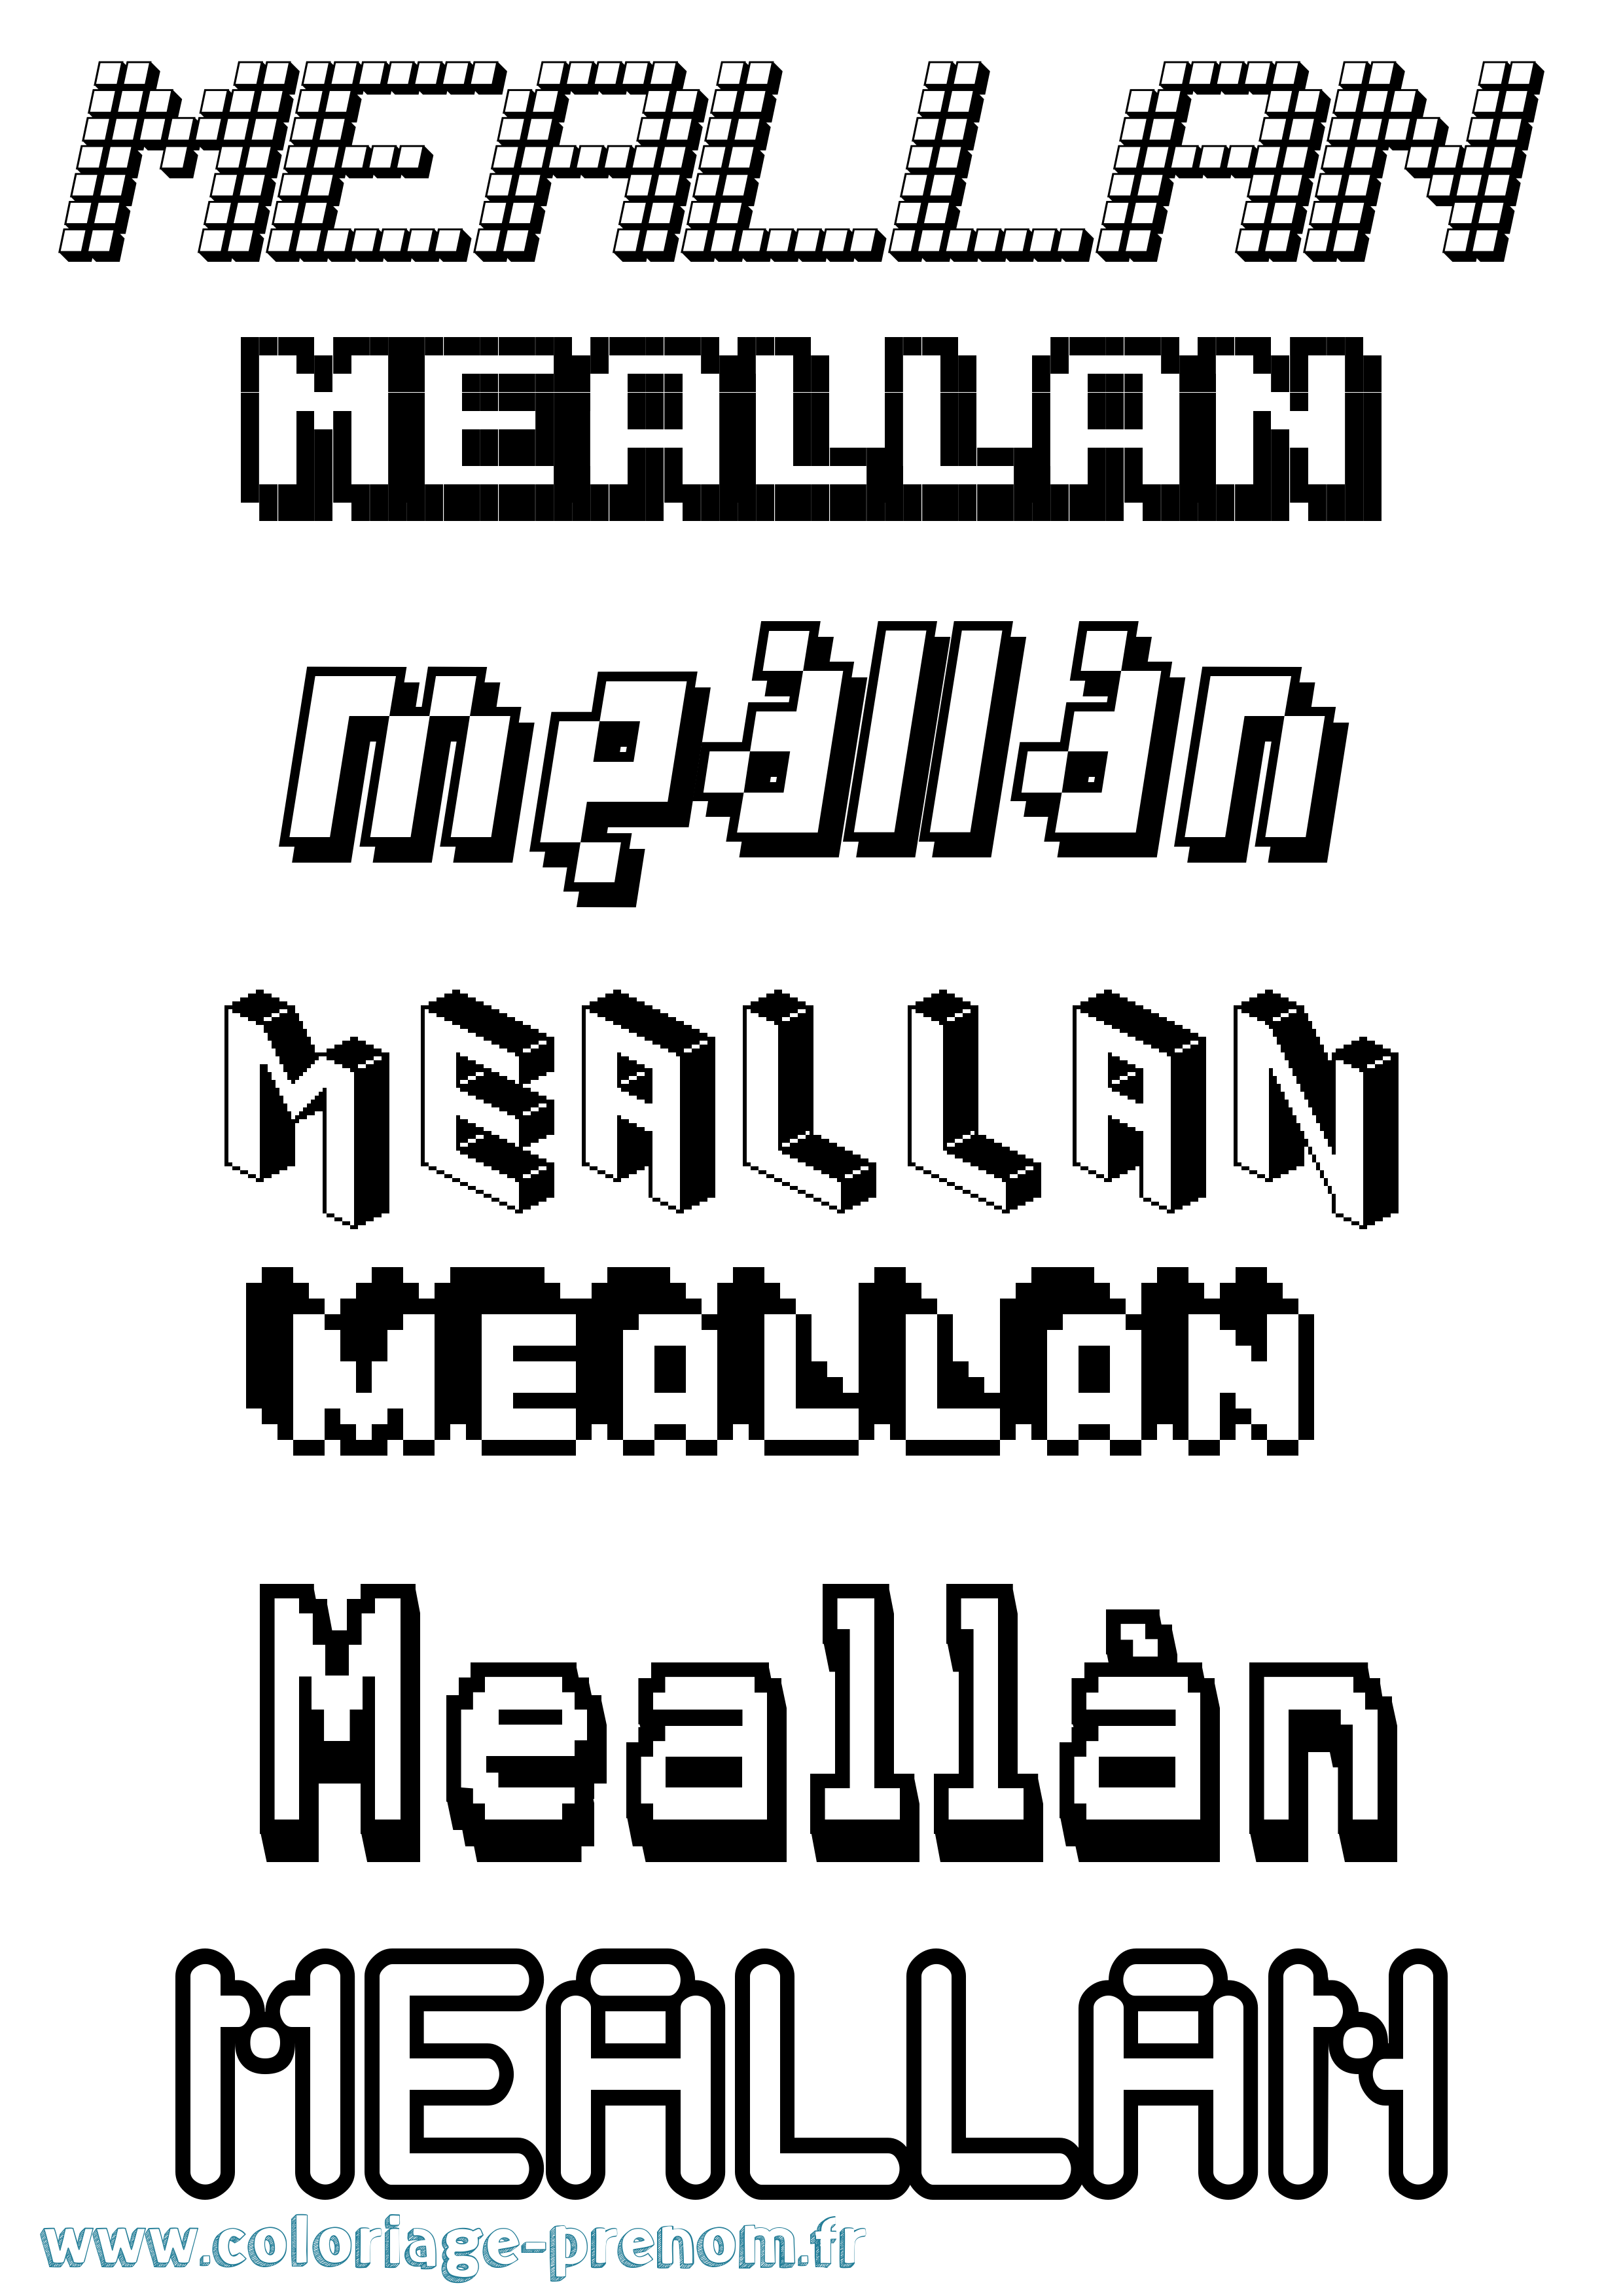 Coloriage prénom Meallán Pixel